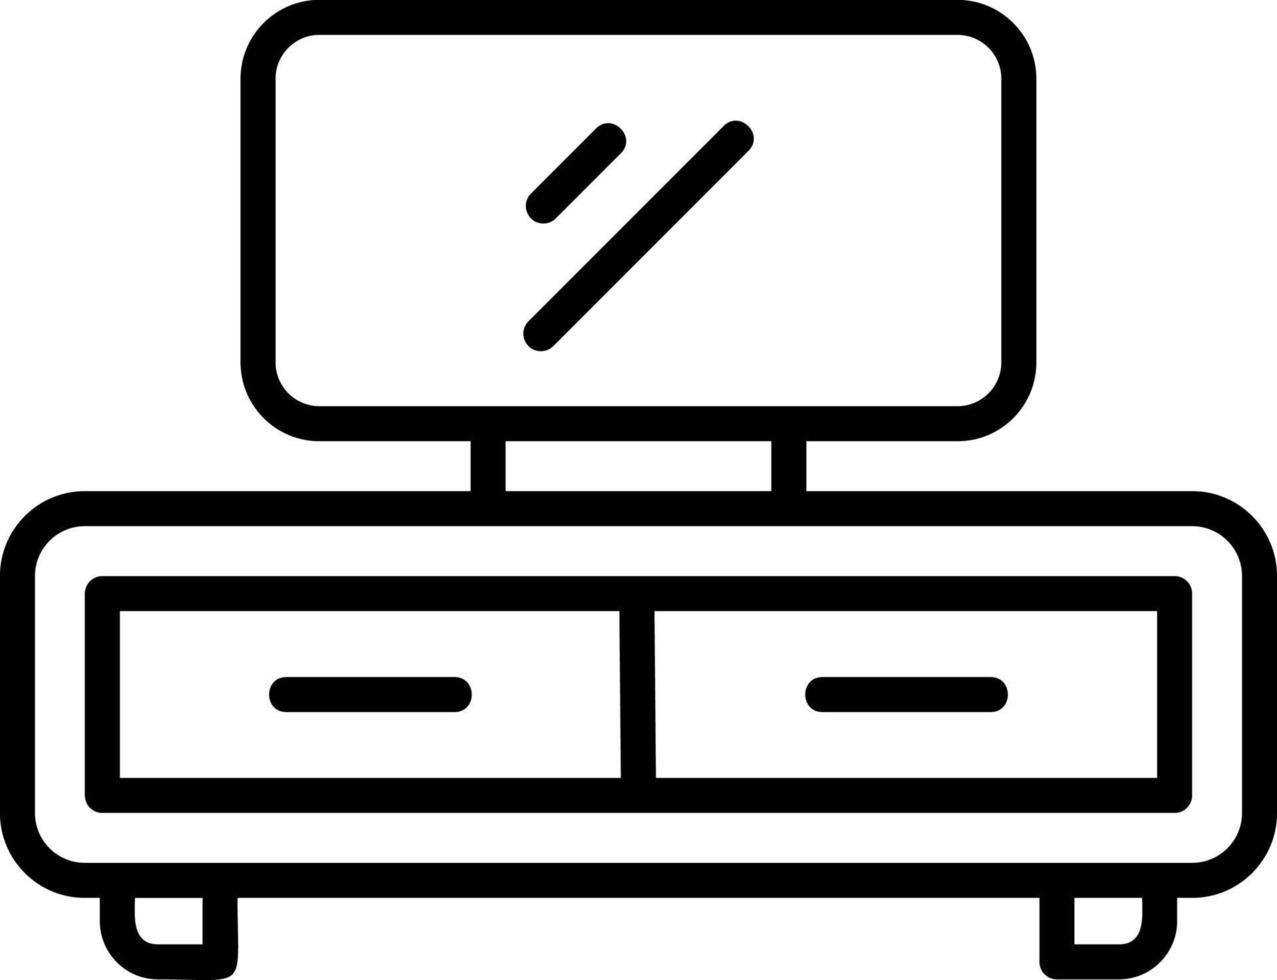 TV tabell vektor ikon design